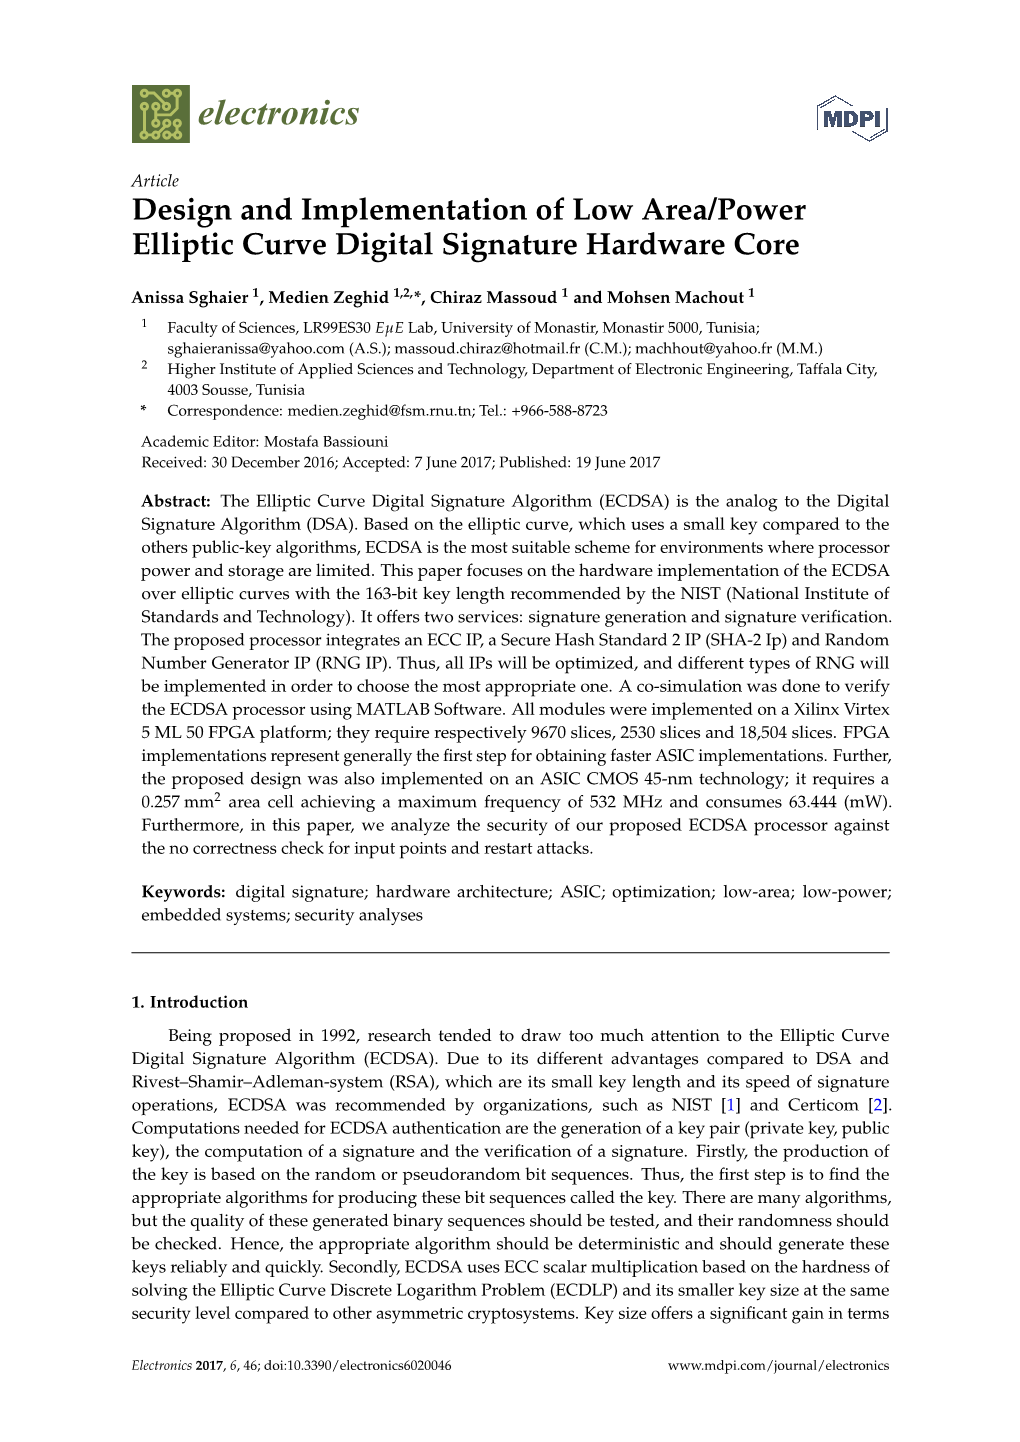 Design and Implementation of Low Area/Power Elliptic Curve Digital Signature Hardware Core